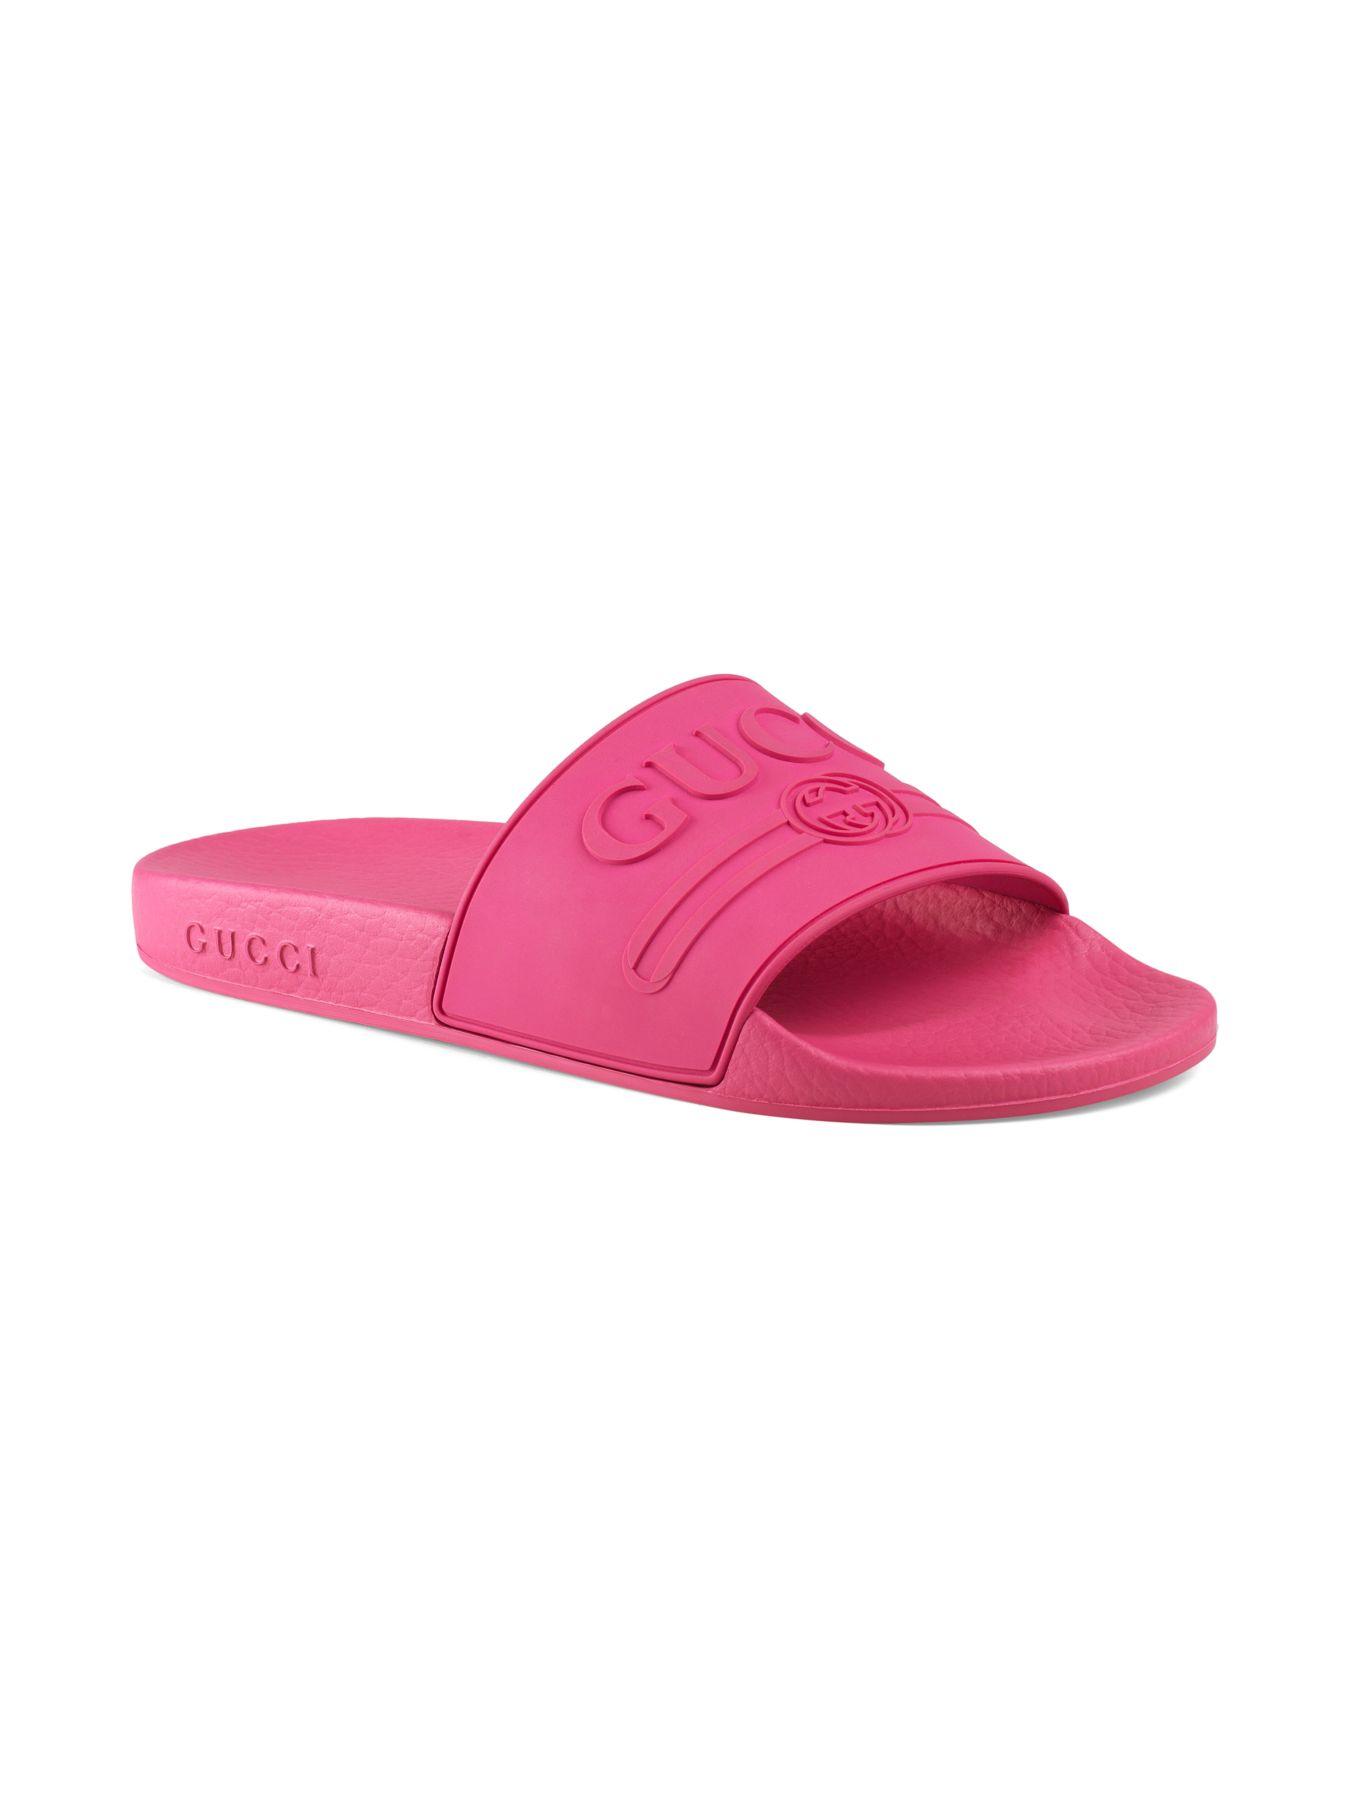 Gucci Pursuit Slide Sandal in Pink | Lyst